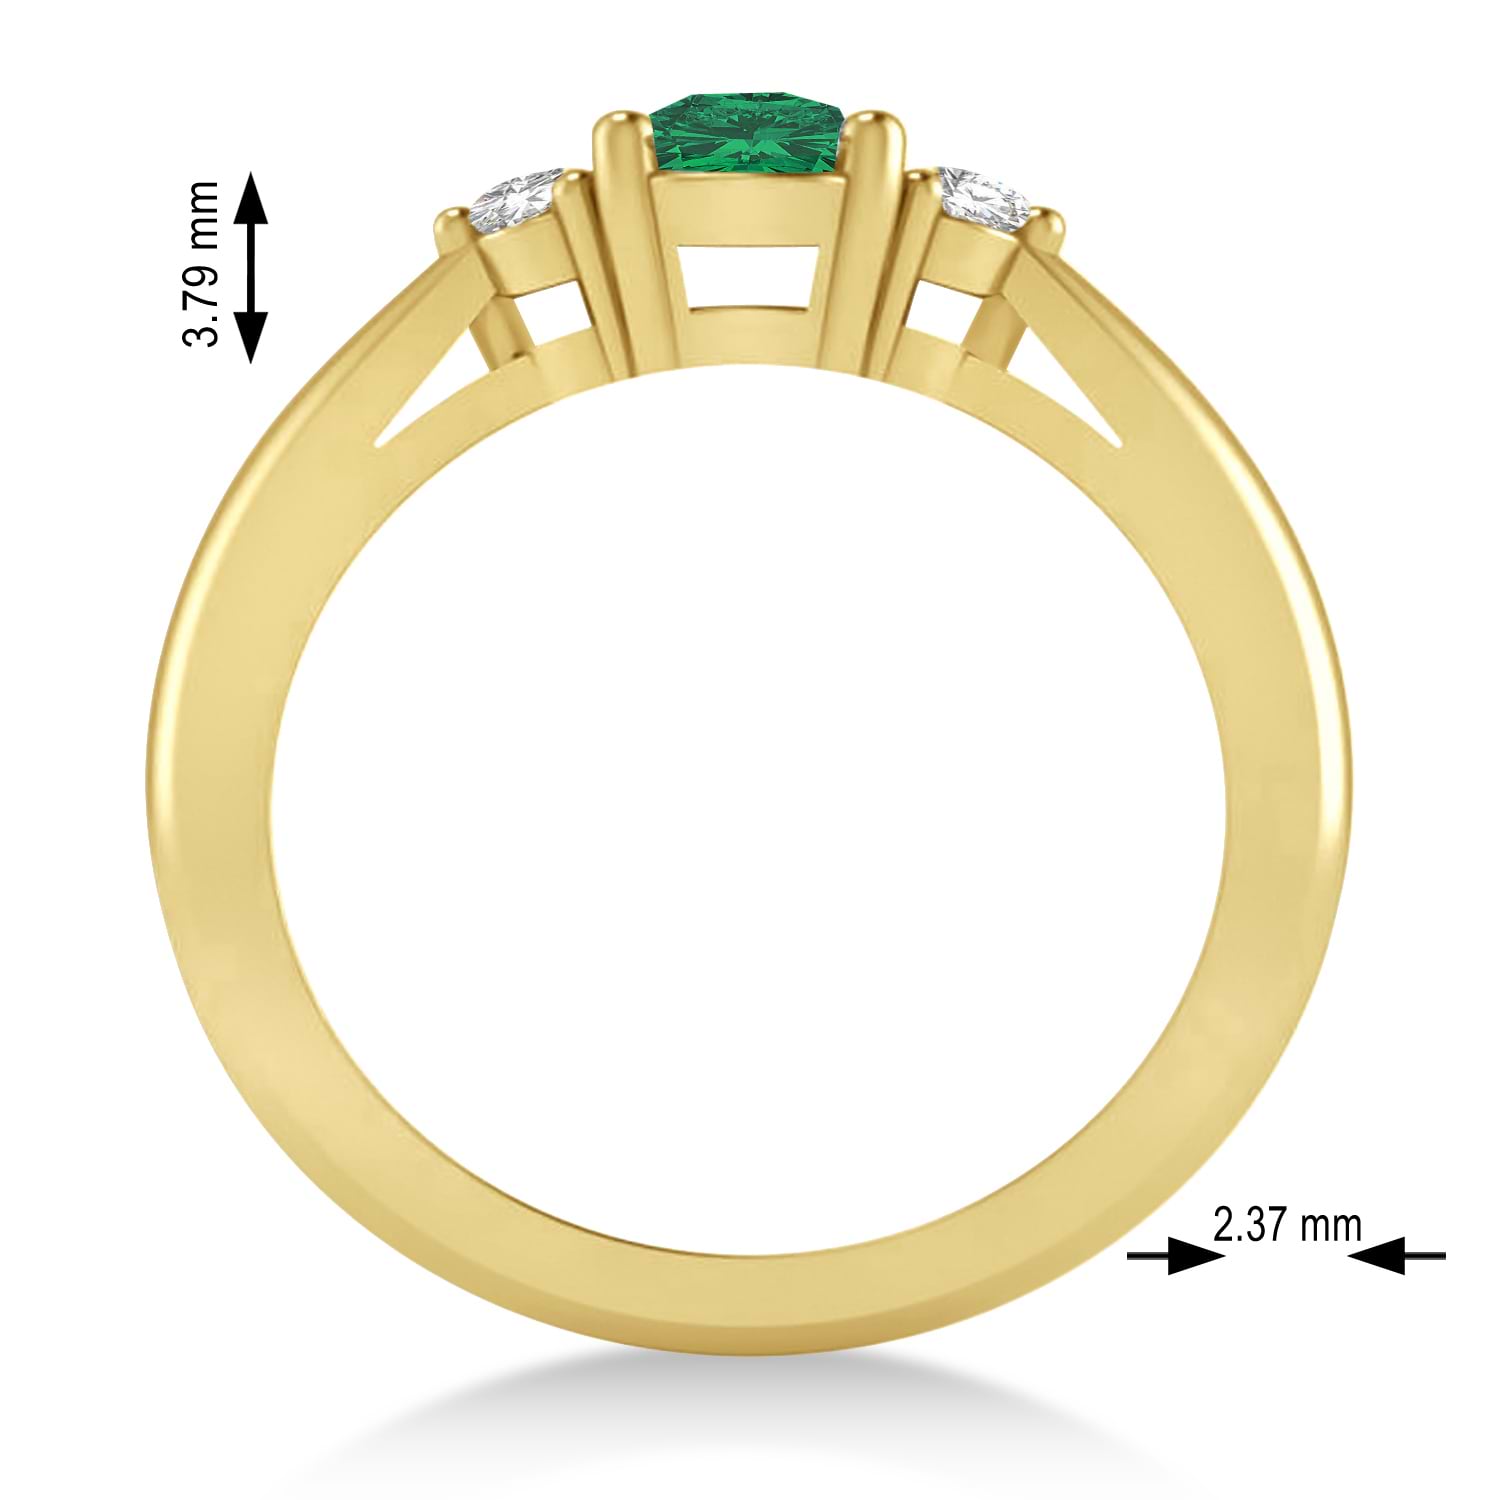 Cushion Emerald & Diamond Three-Stone Engagement Ring 14k Yellow Gold (1.14ct)